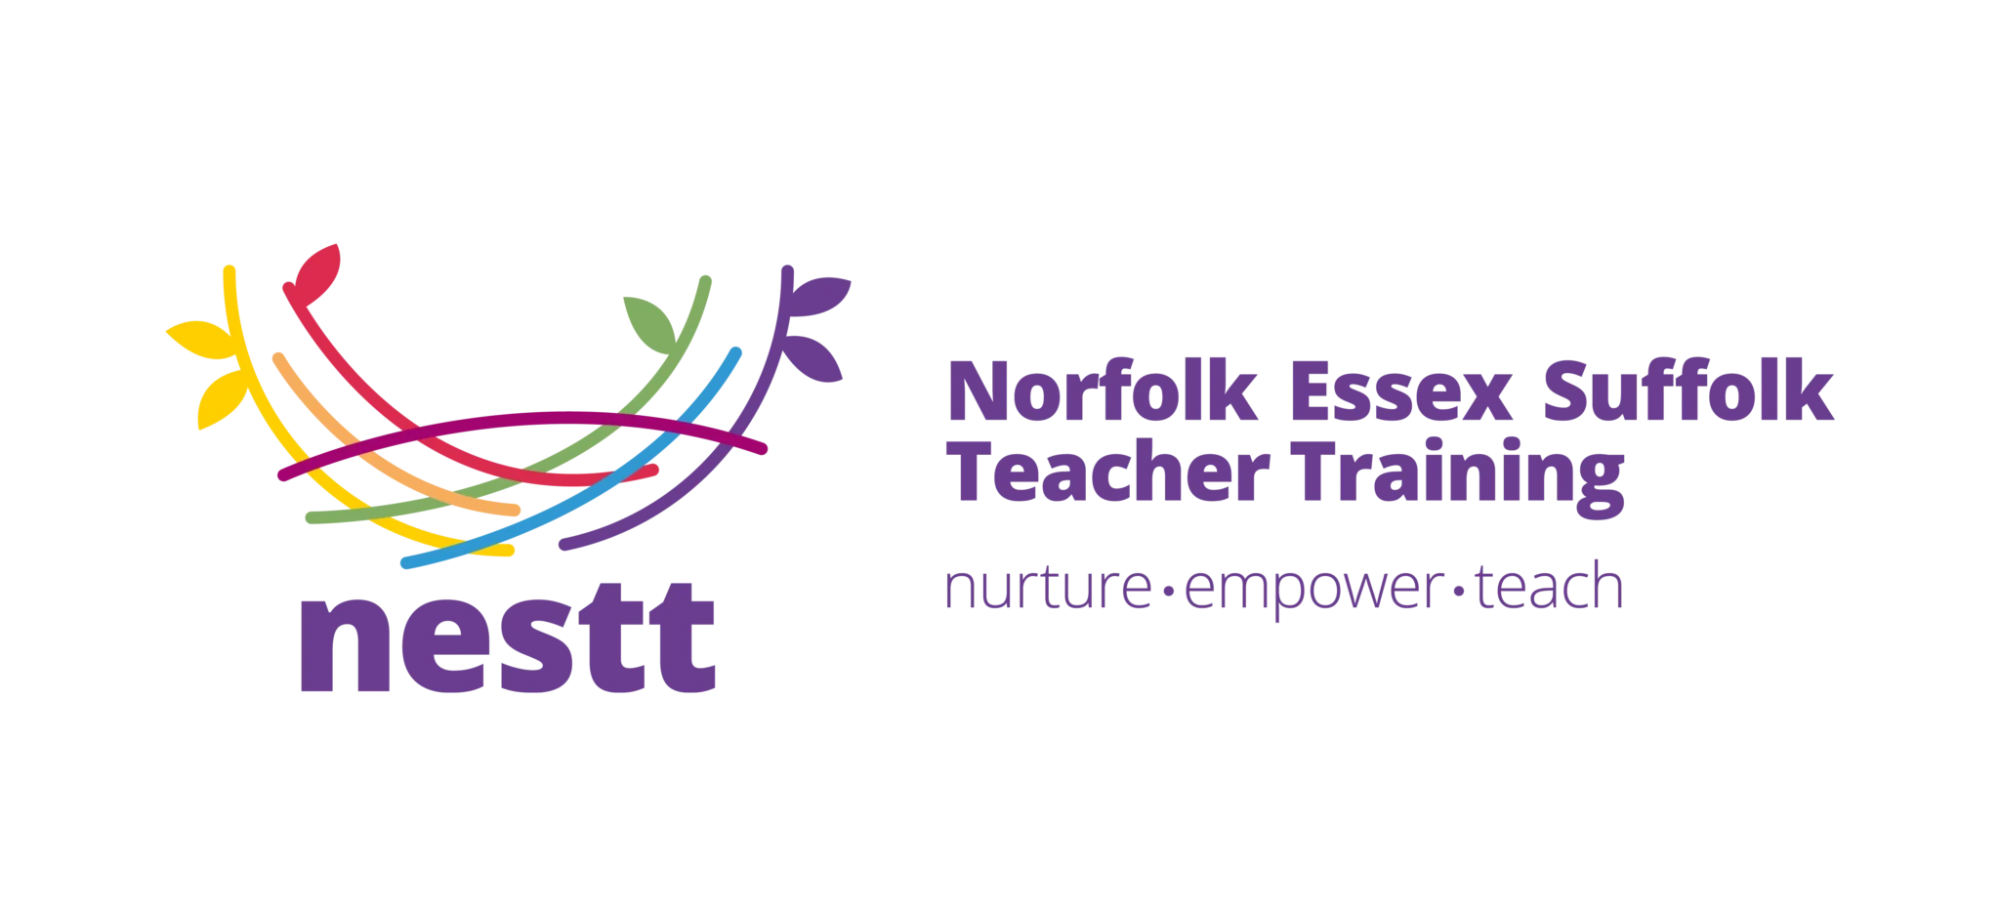 NESTT - Norfolk Essex Suffolk Teacher Training